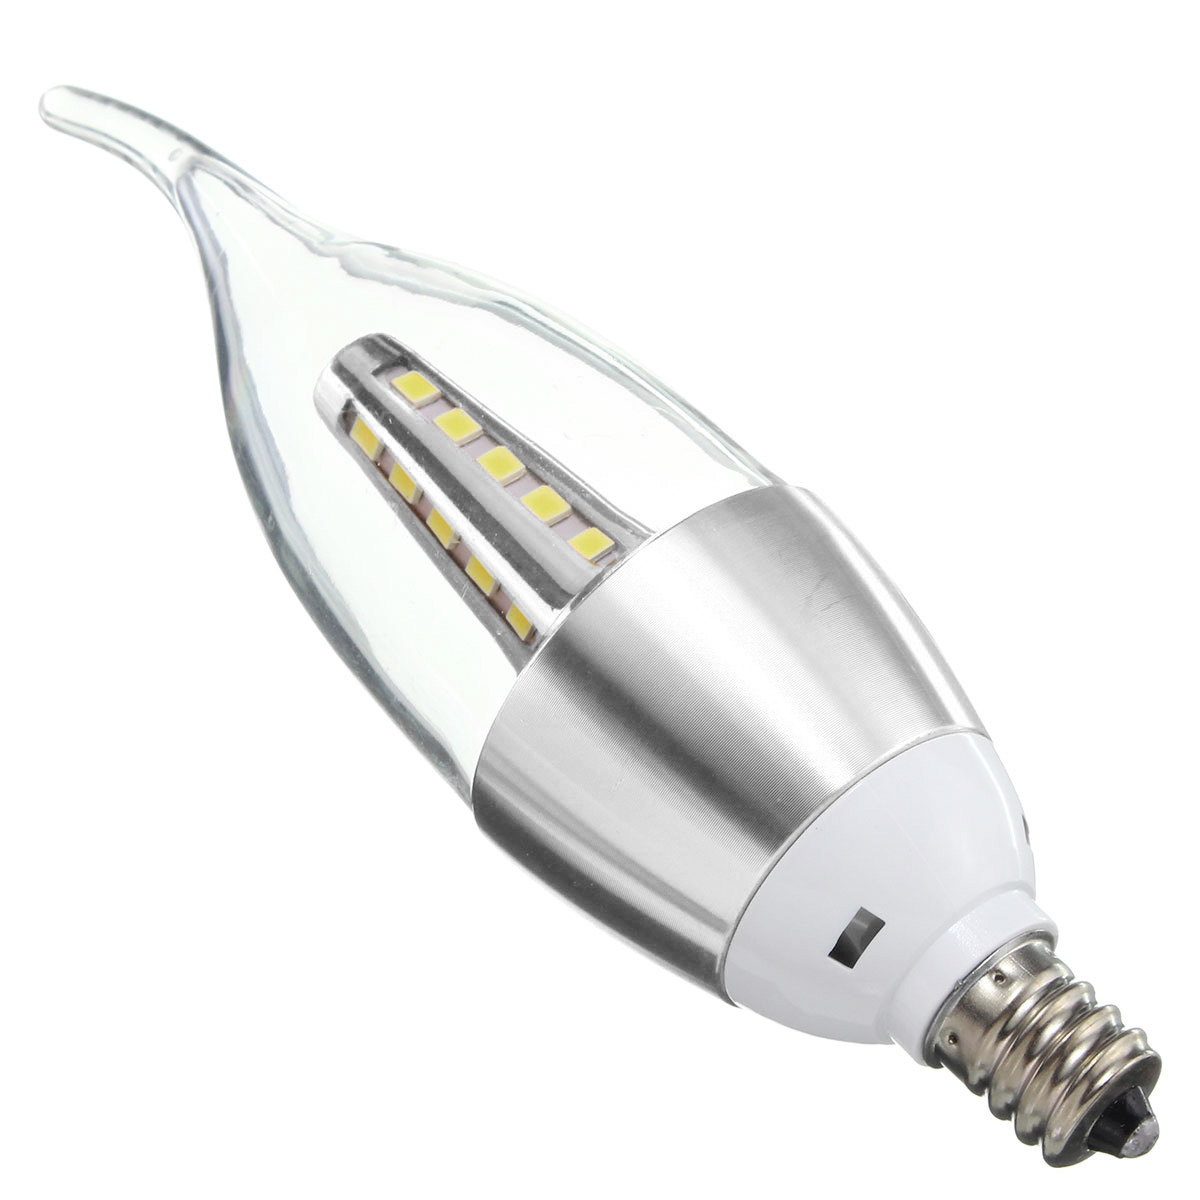 85-265V 4W E27 E14 B22 E12 25 SMD 2835 430Lm Silvery LED Candle Light Bulb Pure White Warm White